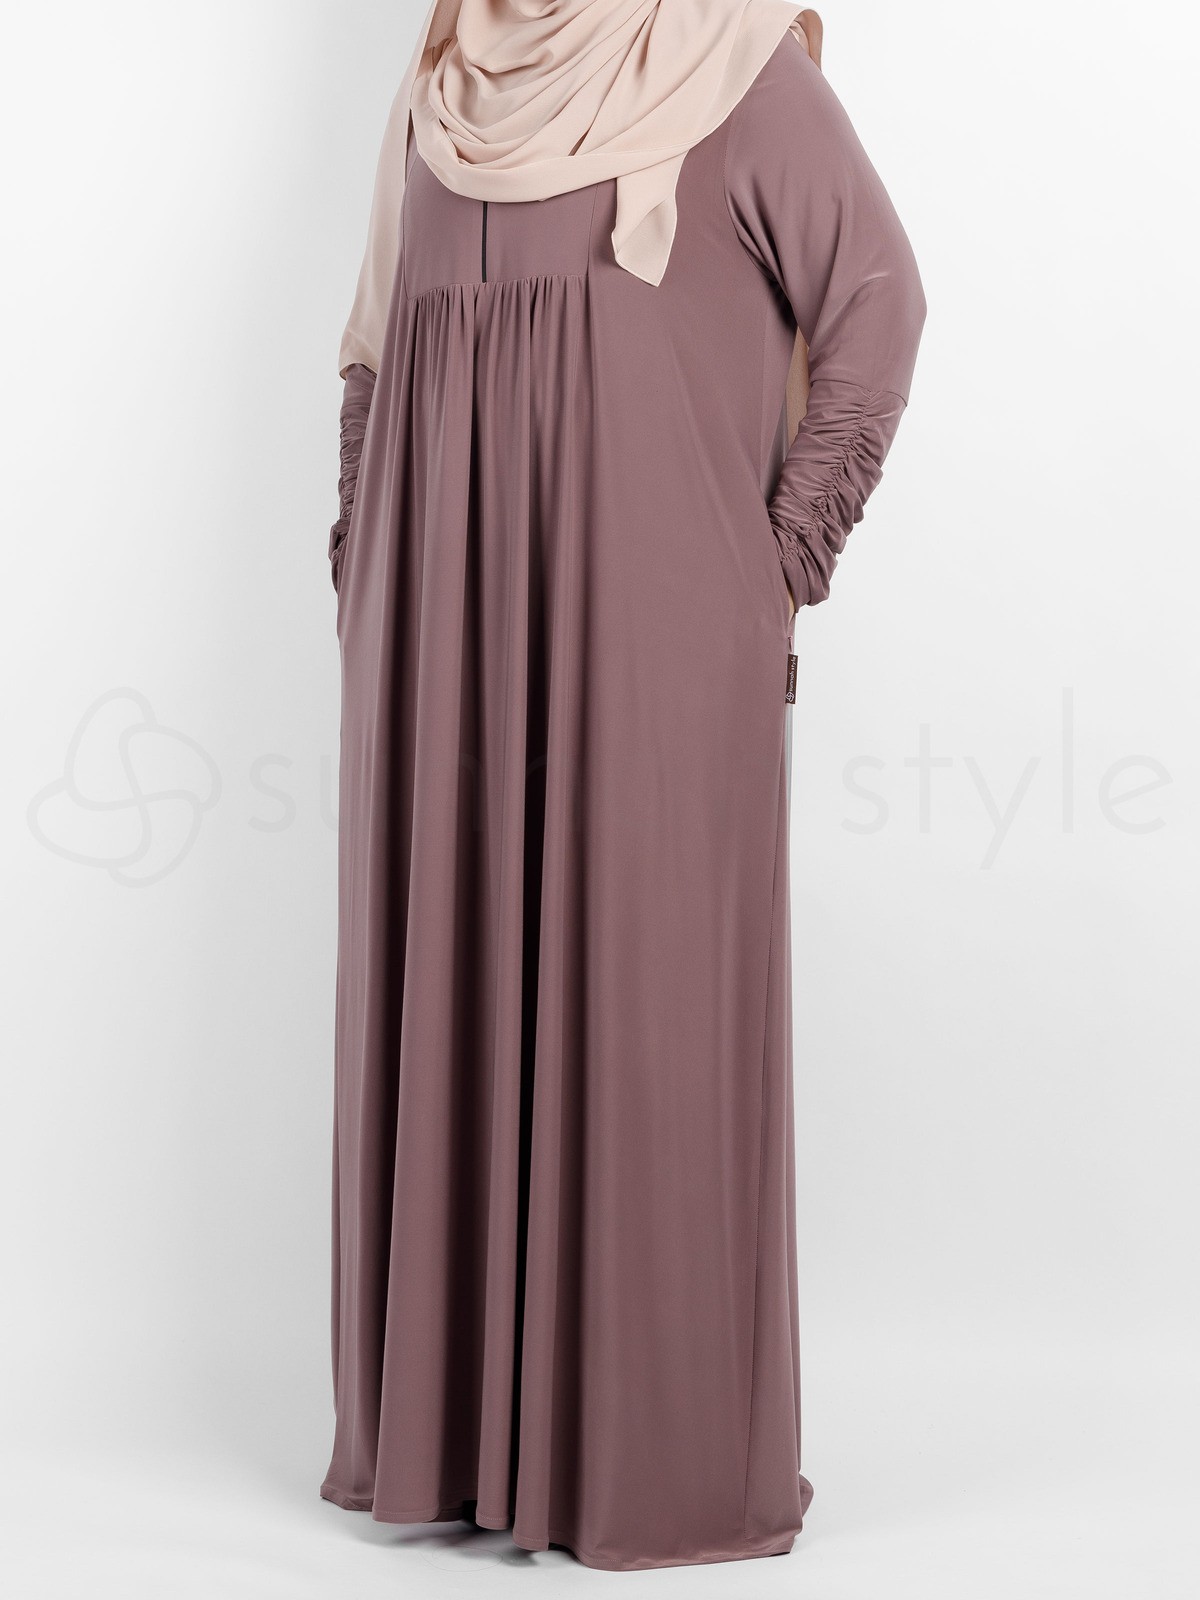 Sunnah Style - Flourish Jersey Abaya (Twilight Mauve)